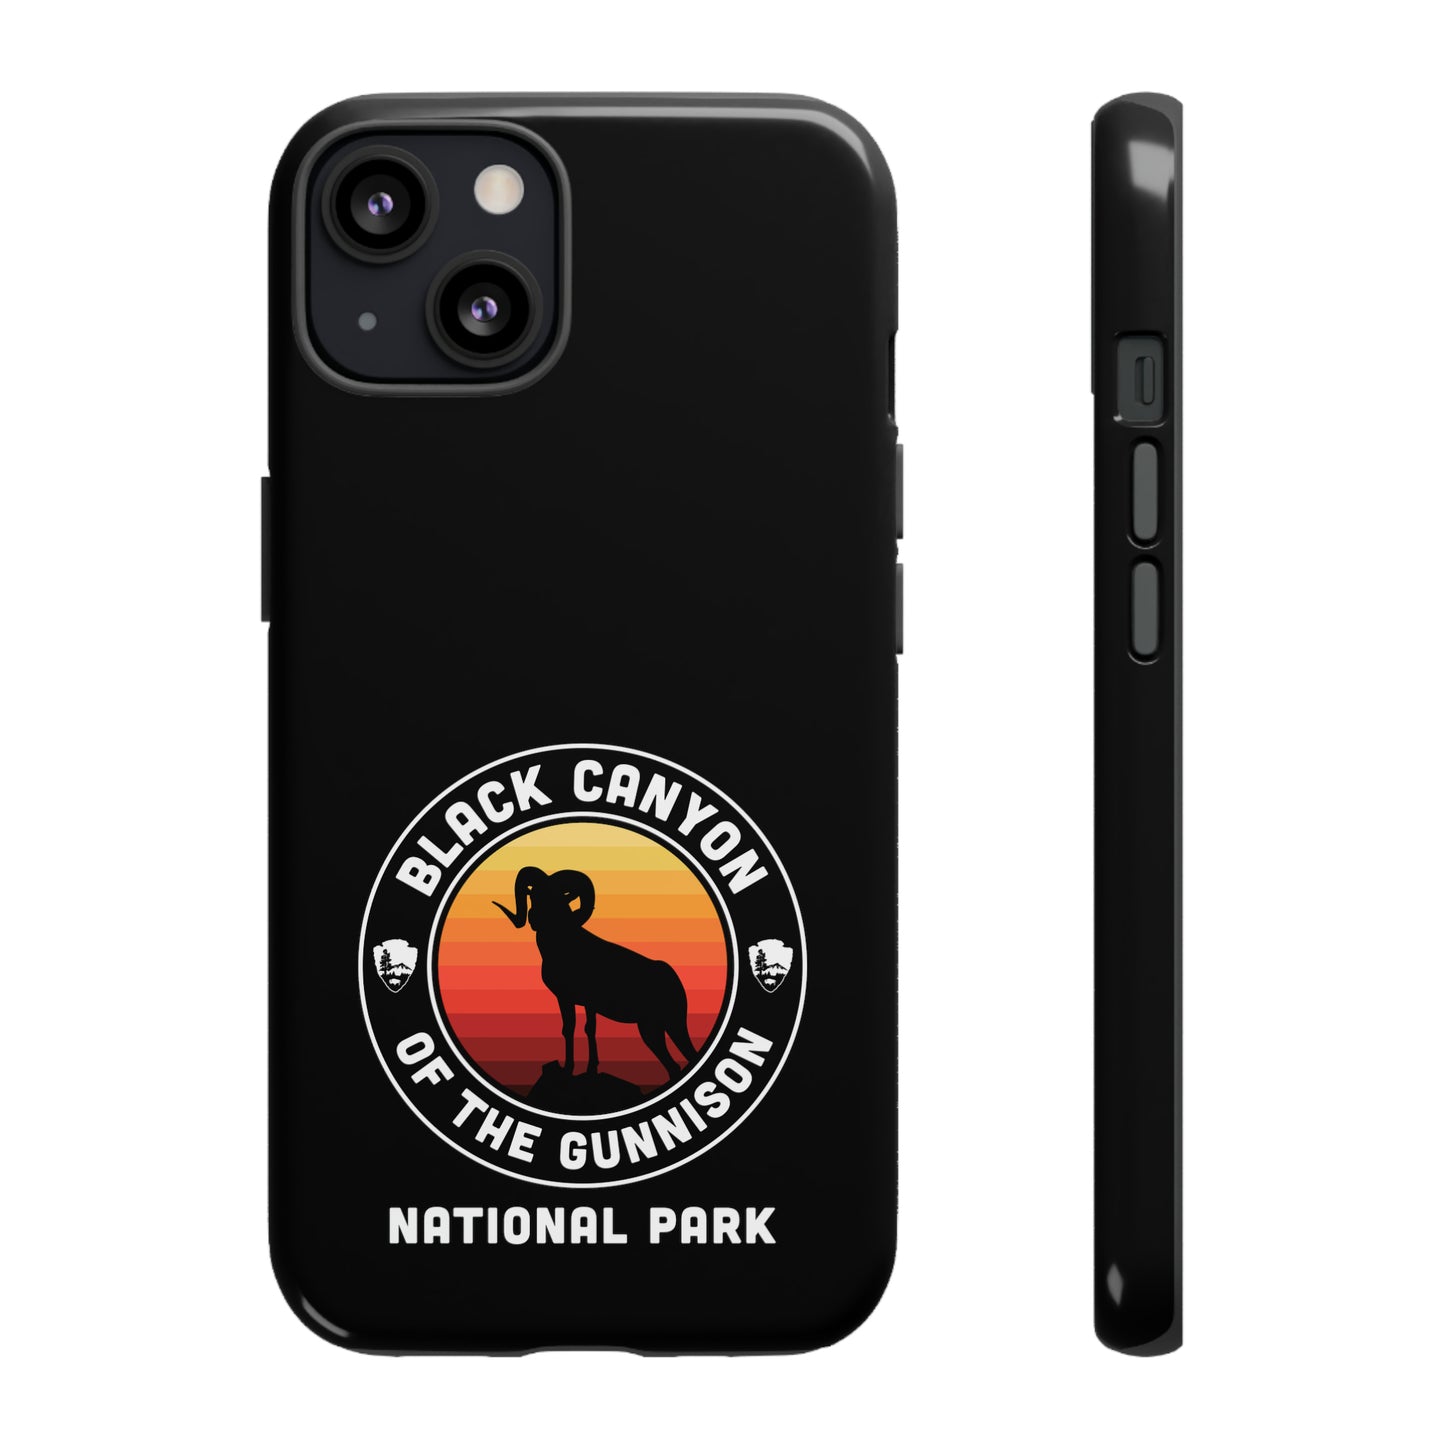 Black Canyon of the Gunnison National Park Phone Case - Round Emblem Design